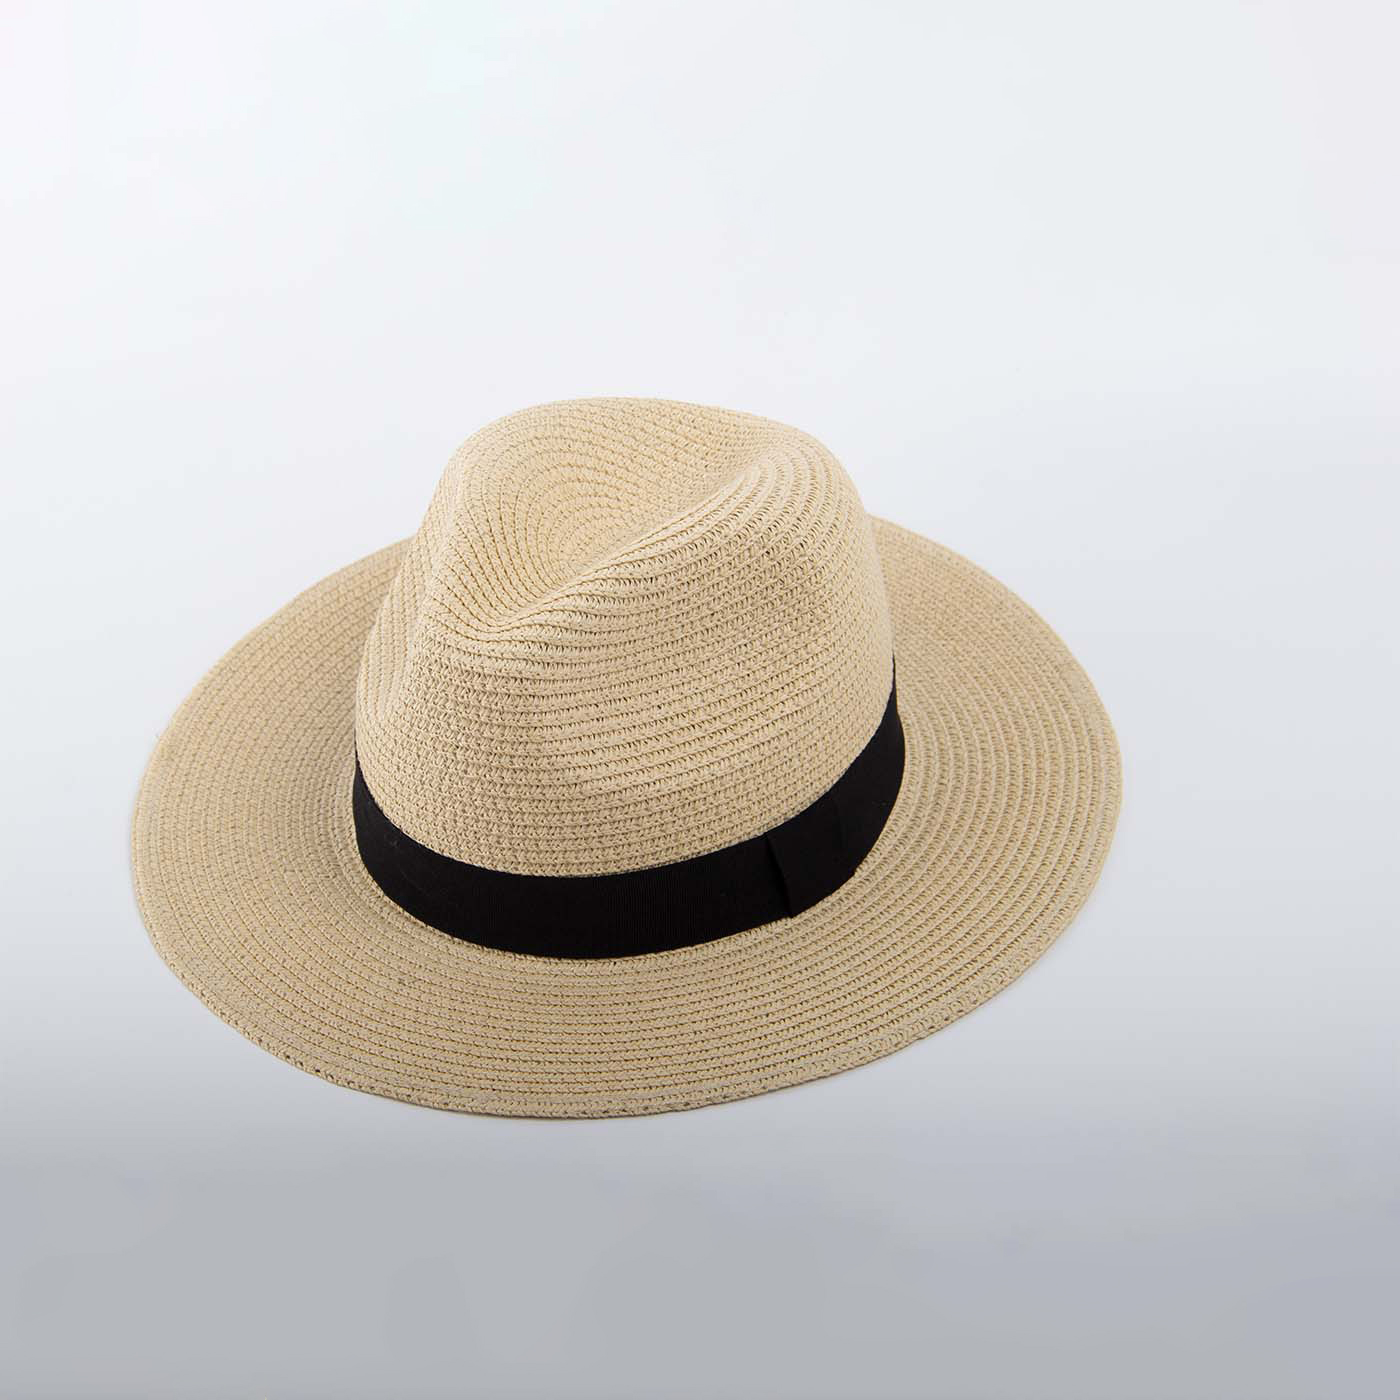 Customized Wide Brim Panama Hat4